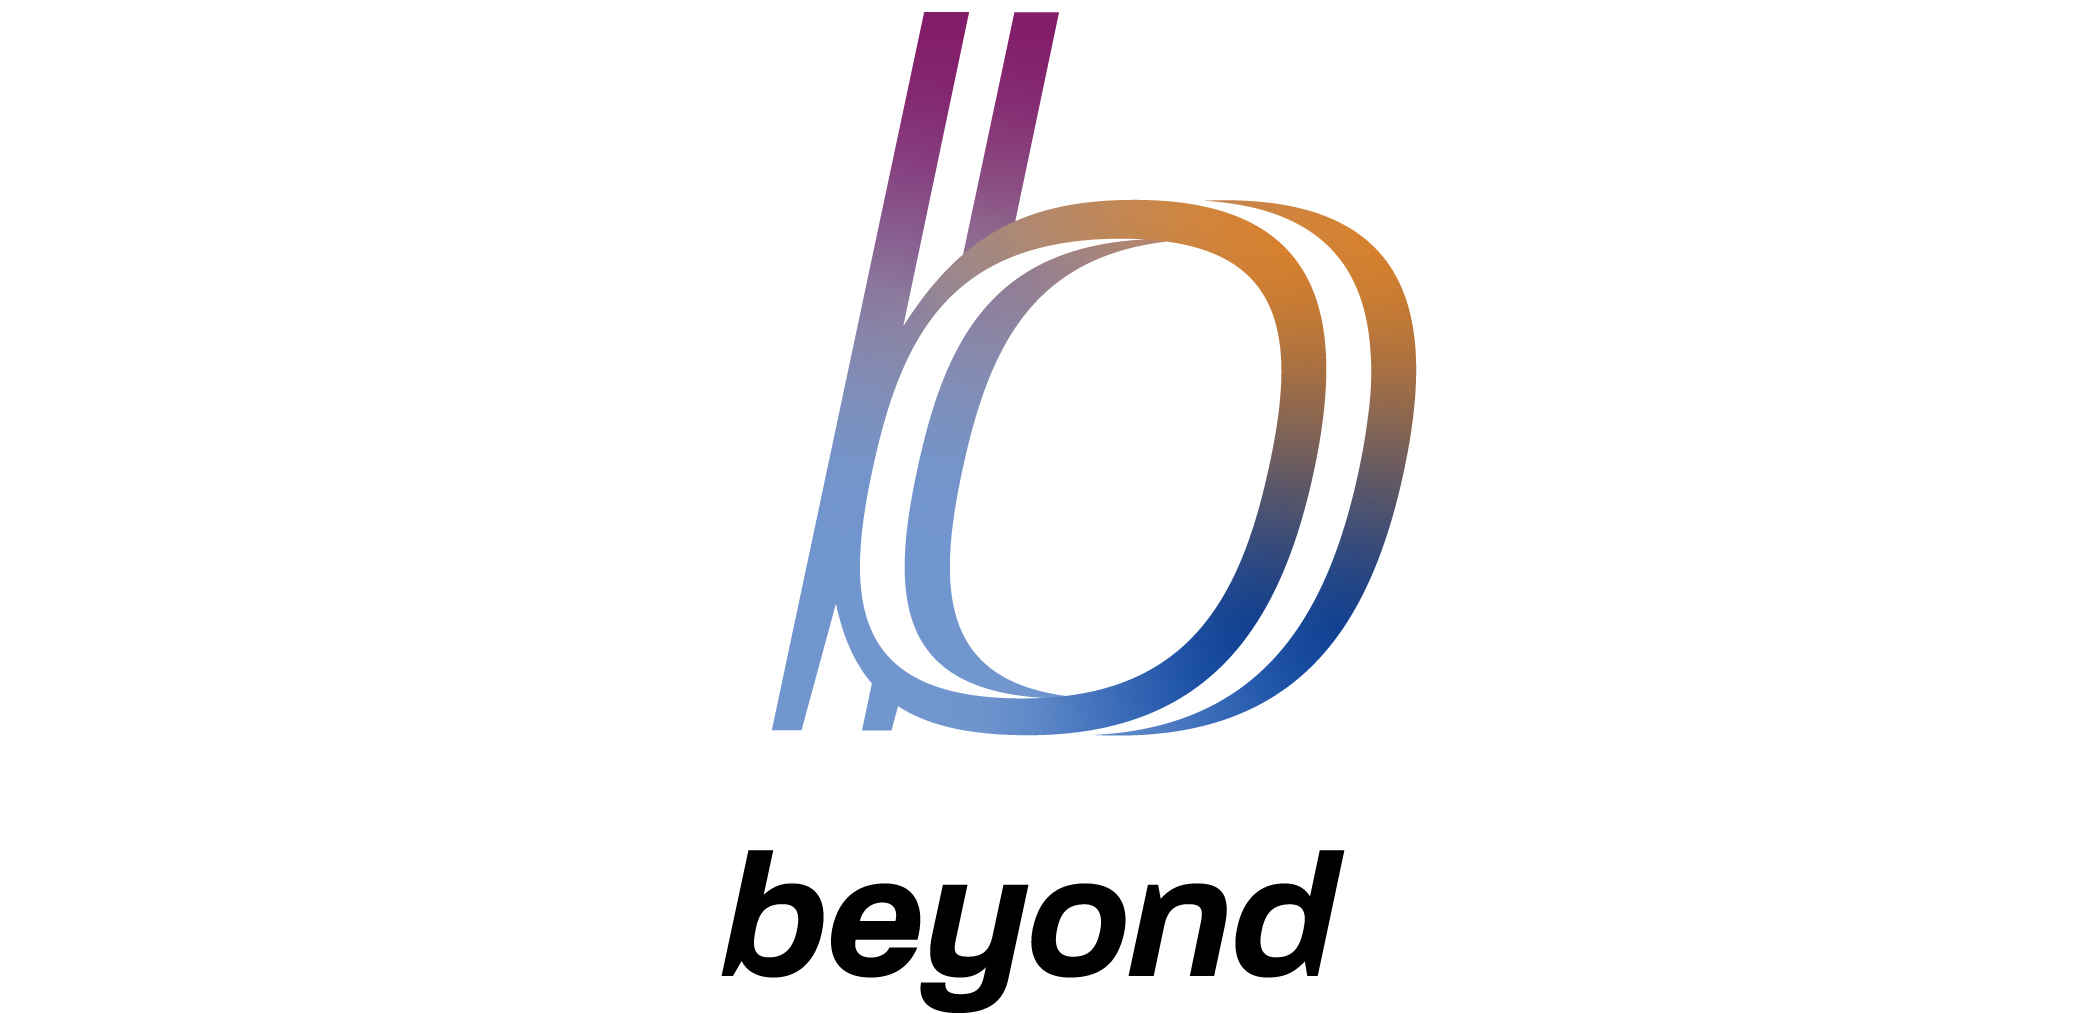 Beyond logo